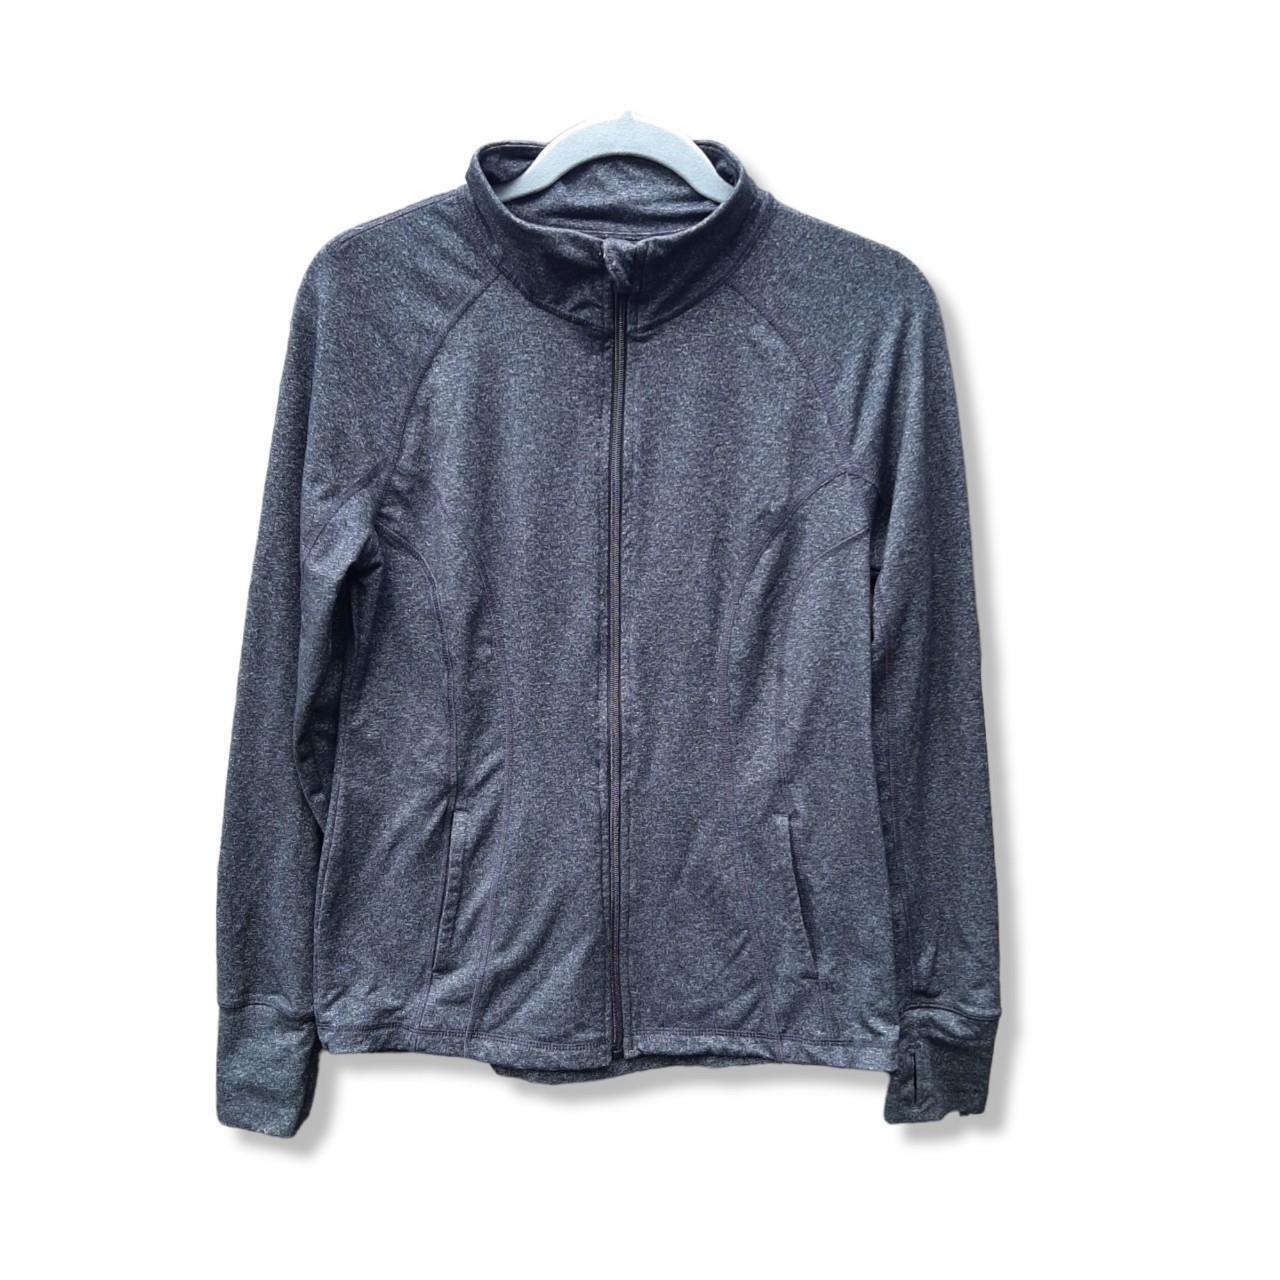 90 Degree by Reflex Zip up Grey Jacket - Size L, - Depop